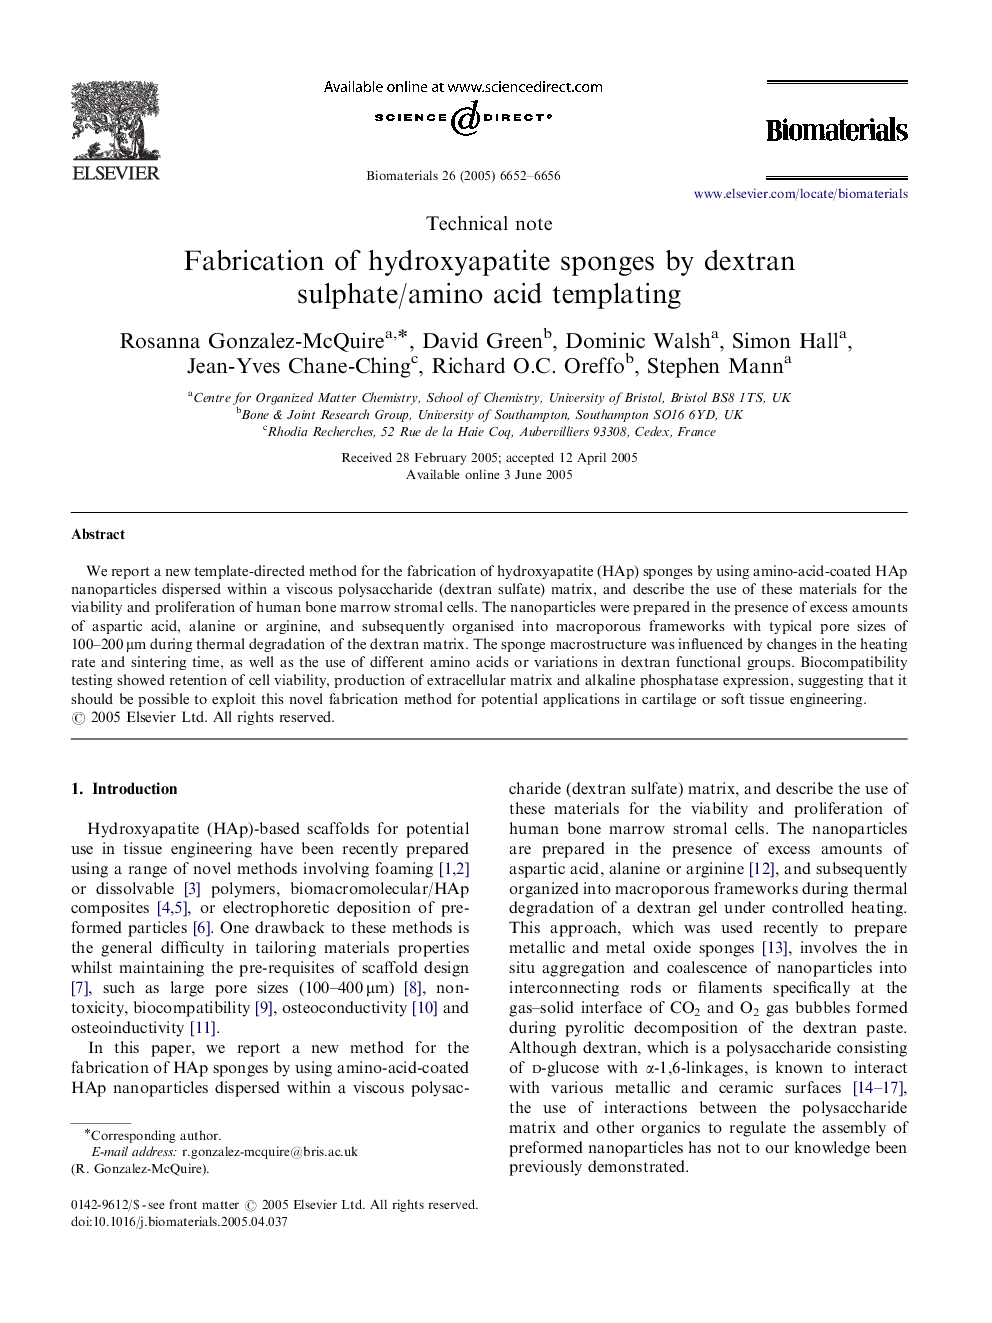 Fabrication of hydroxyapatite sponges by dextran sulphate/amino acid templating